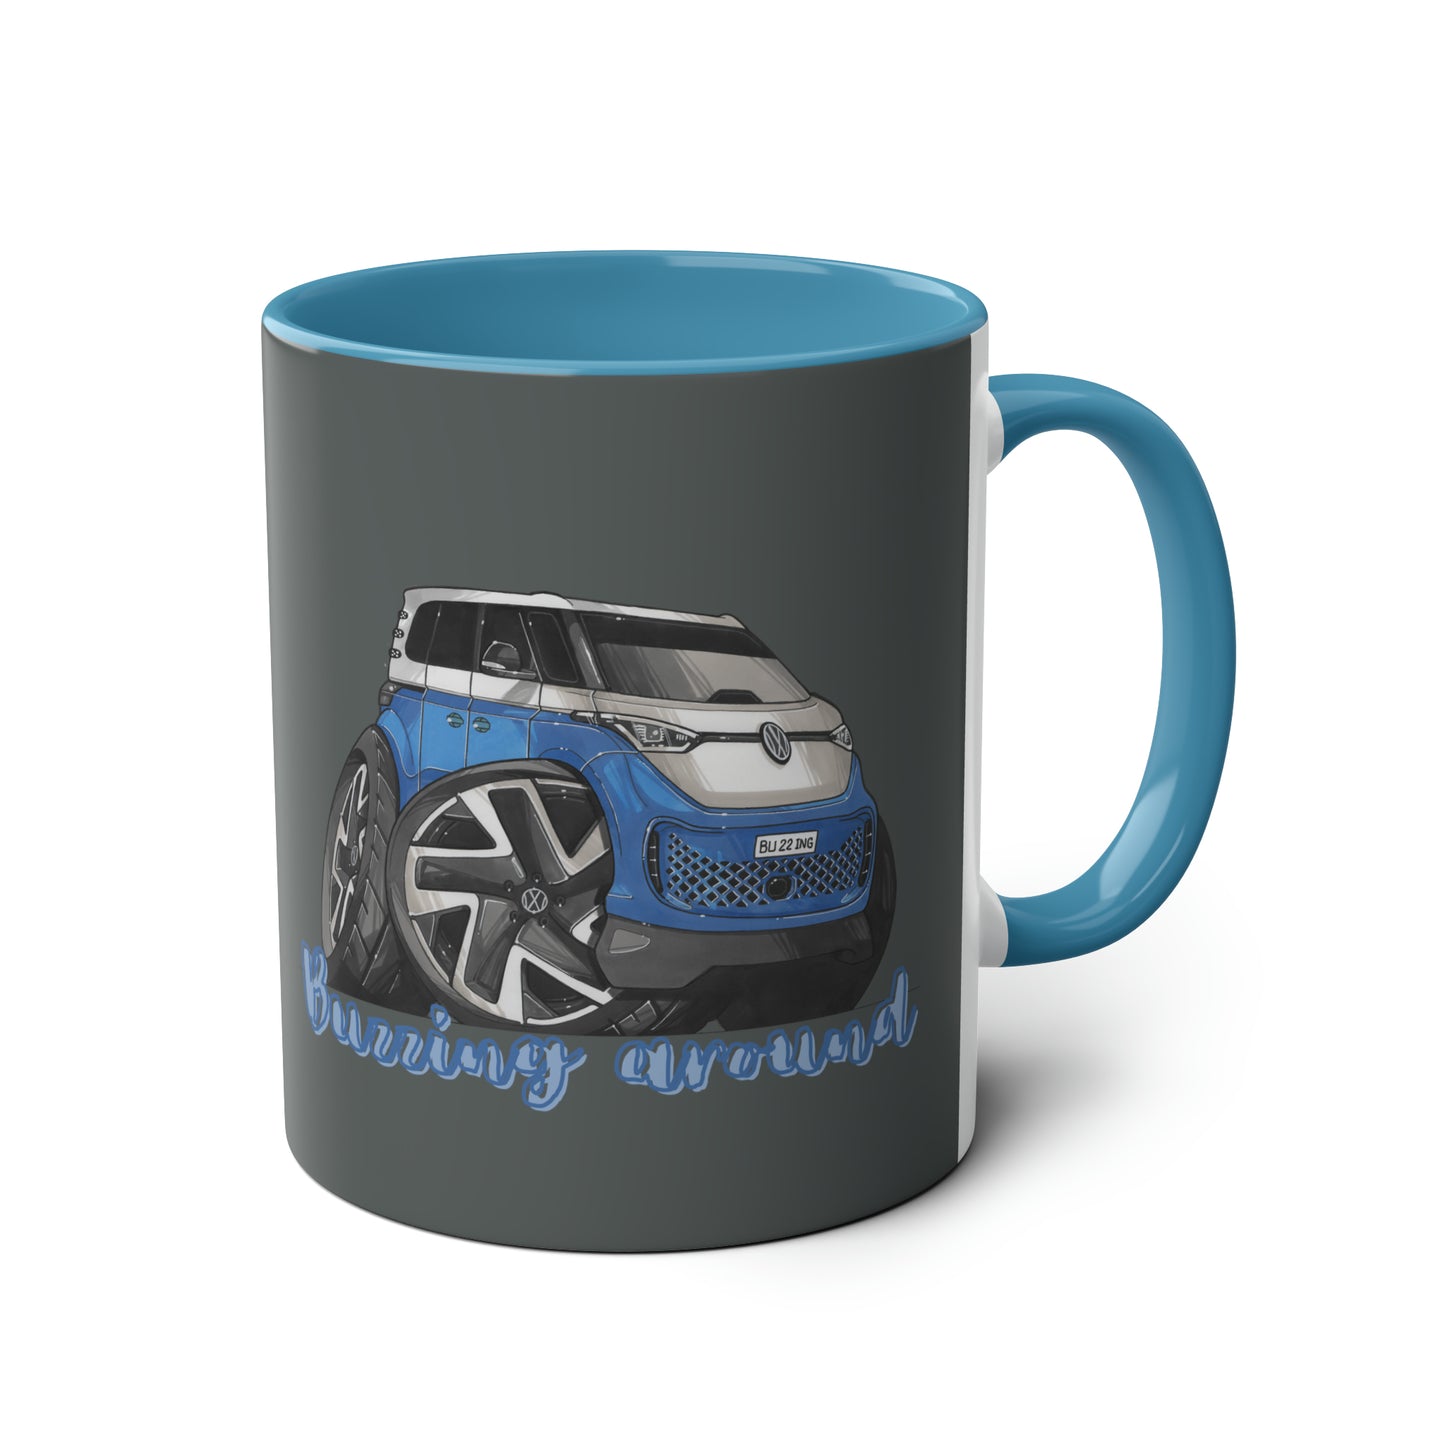 Coffee Mug, Buzzing around - Blue. (iD Buzz)